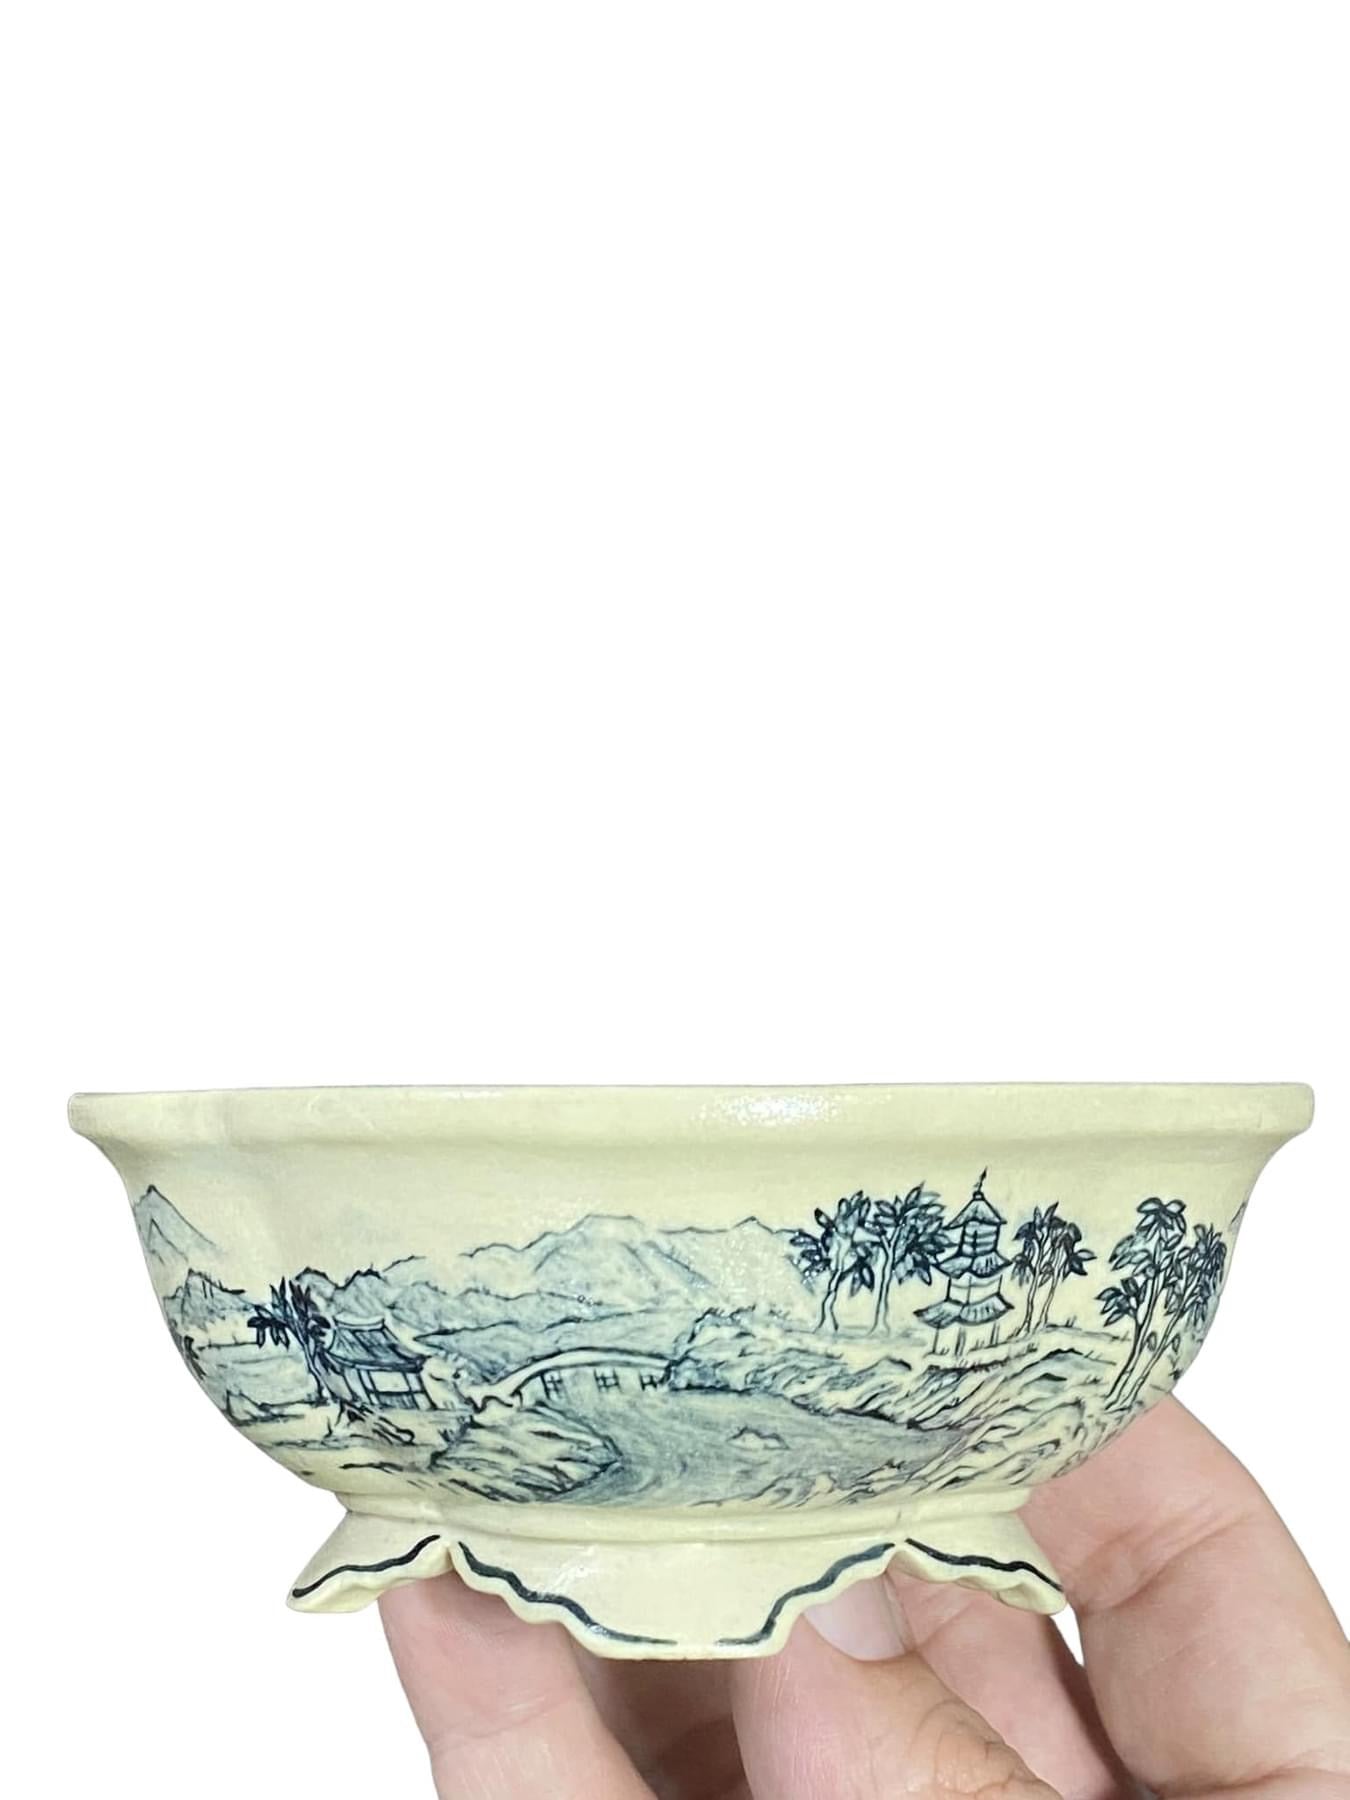 Kouzan - Exquisite Hand Painted Bonsai Pot (4-9/16” wide)